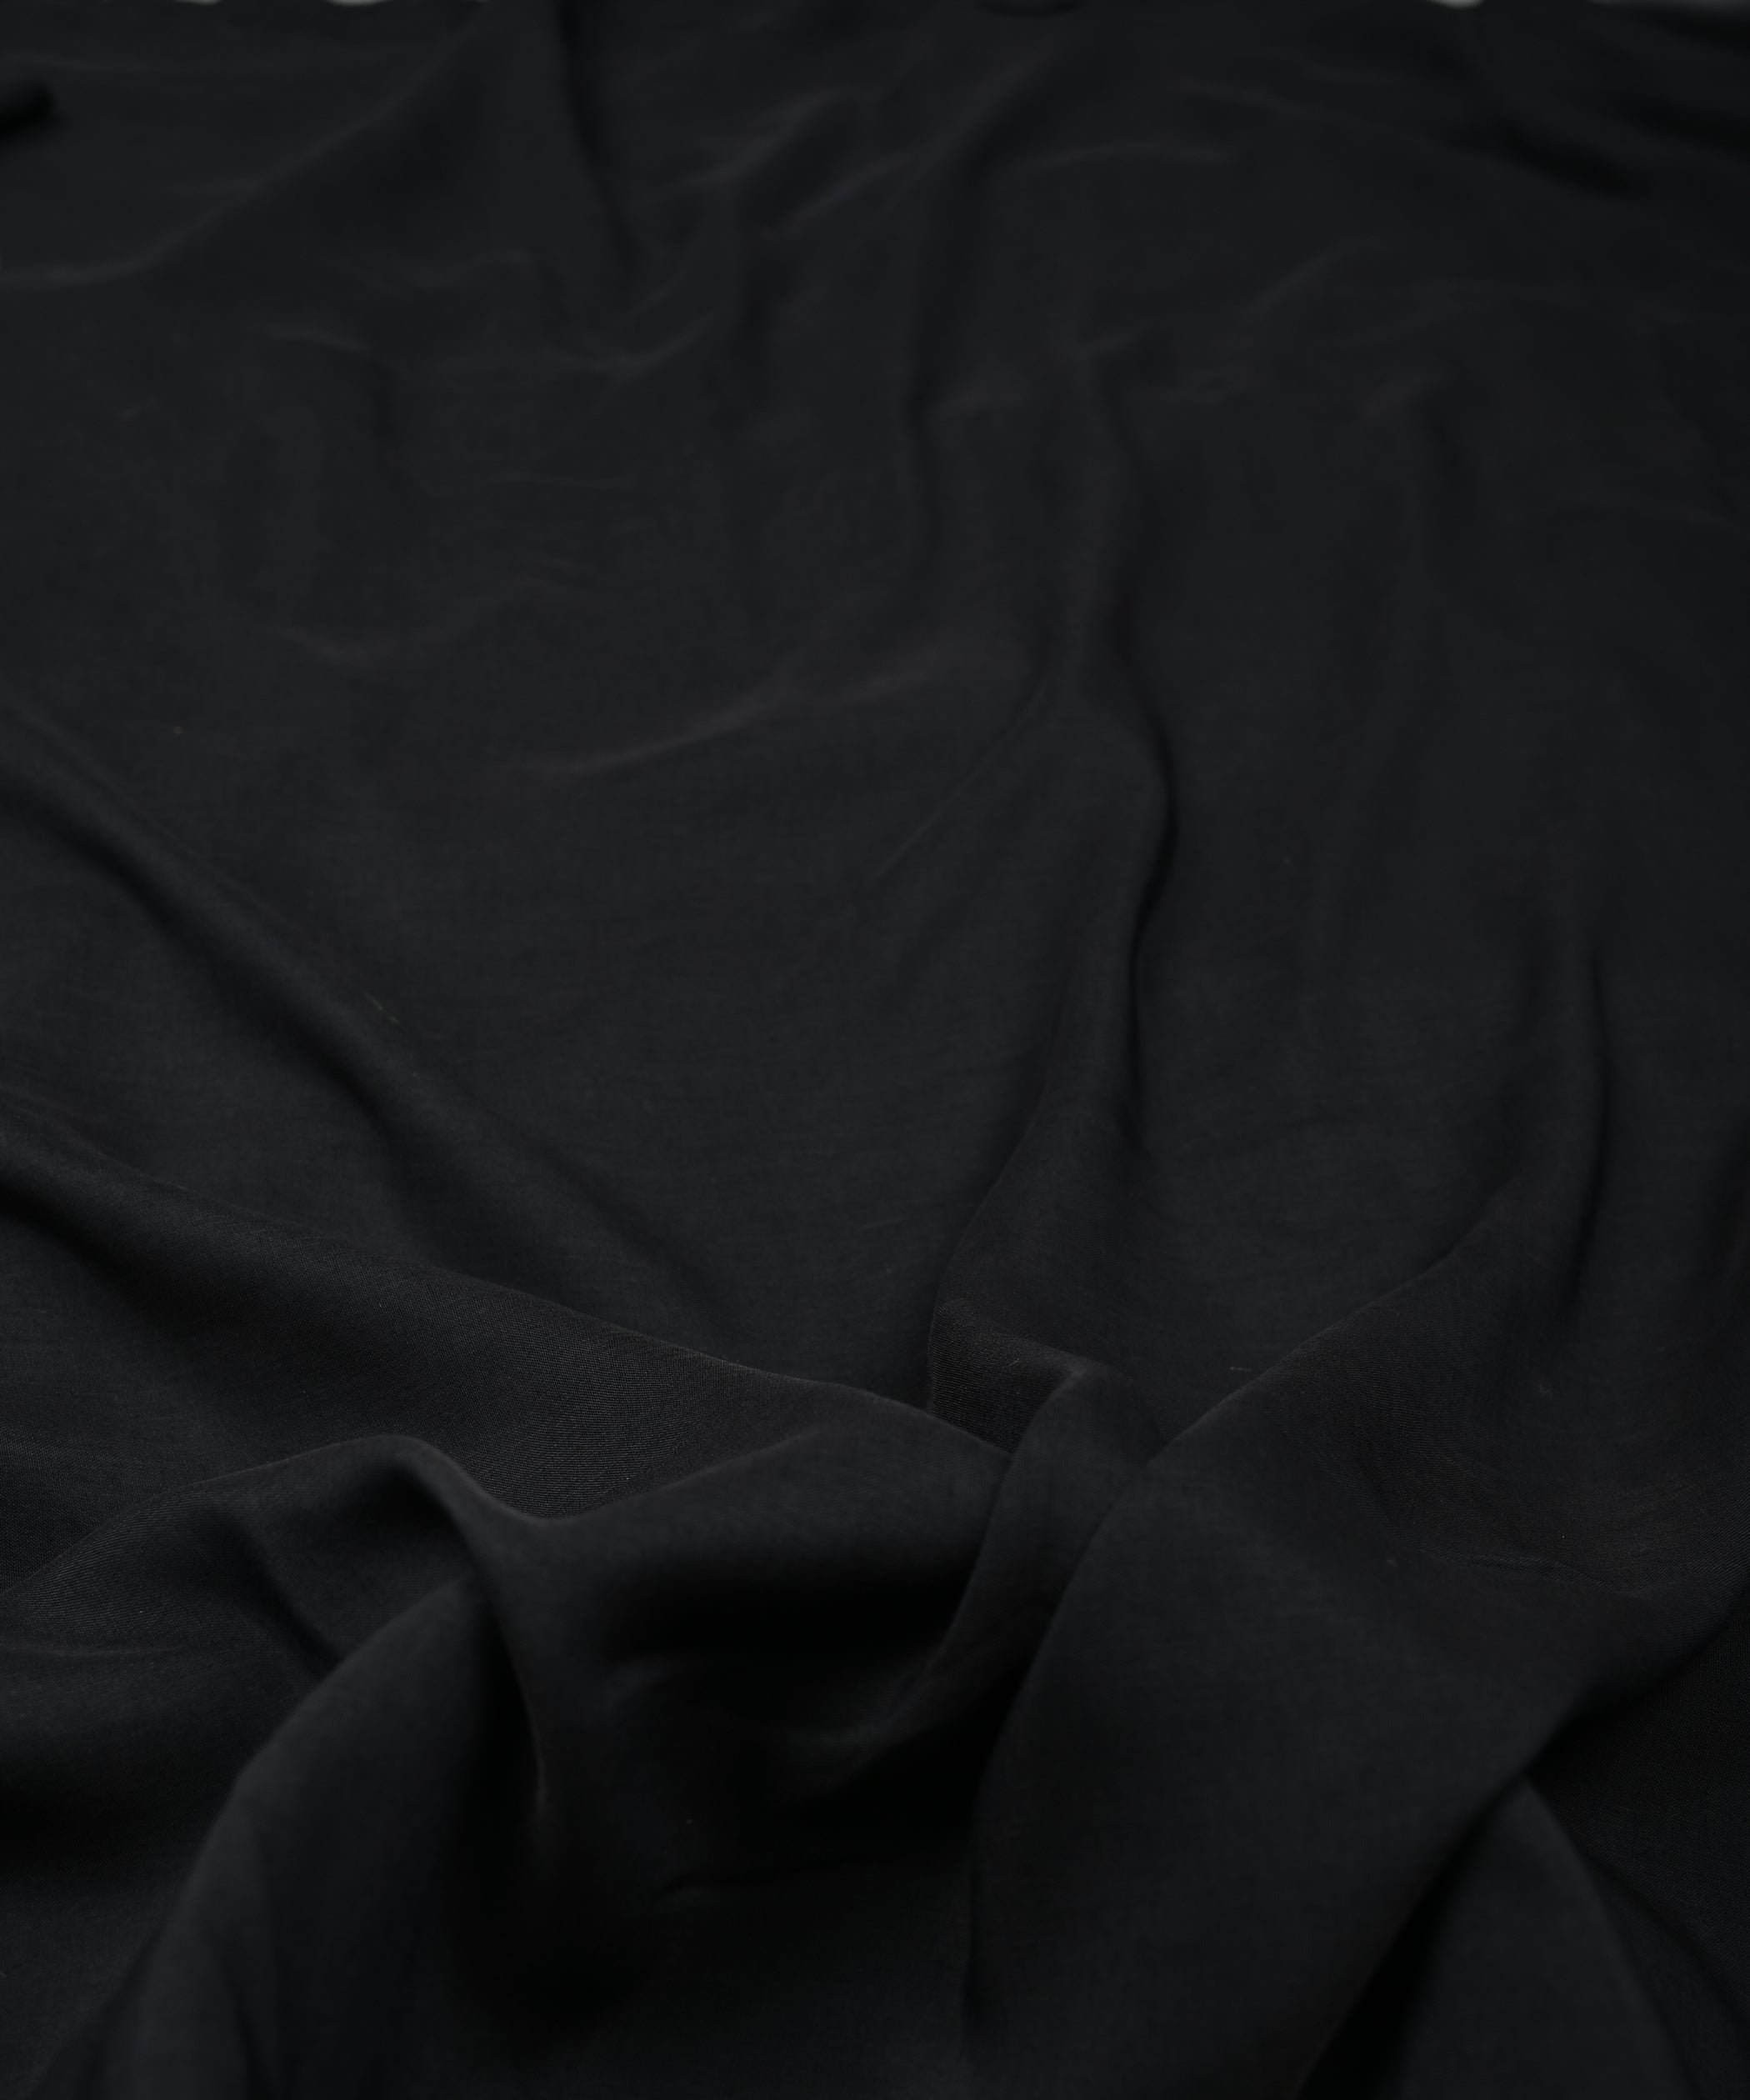 Black Plain Dyed Polyester Muslin Fabric